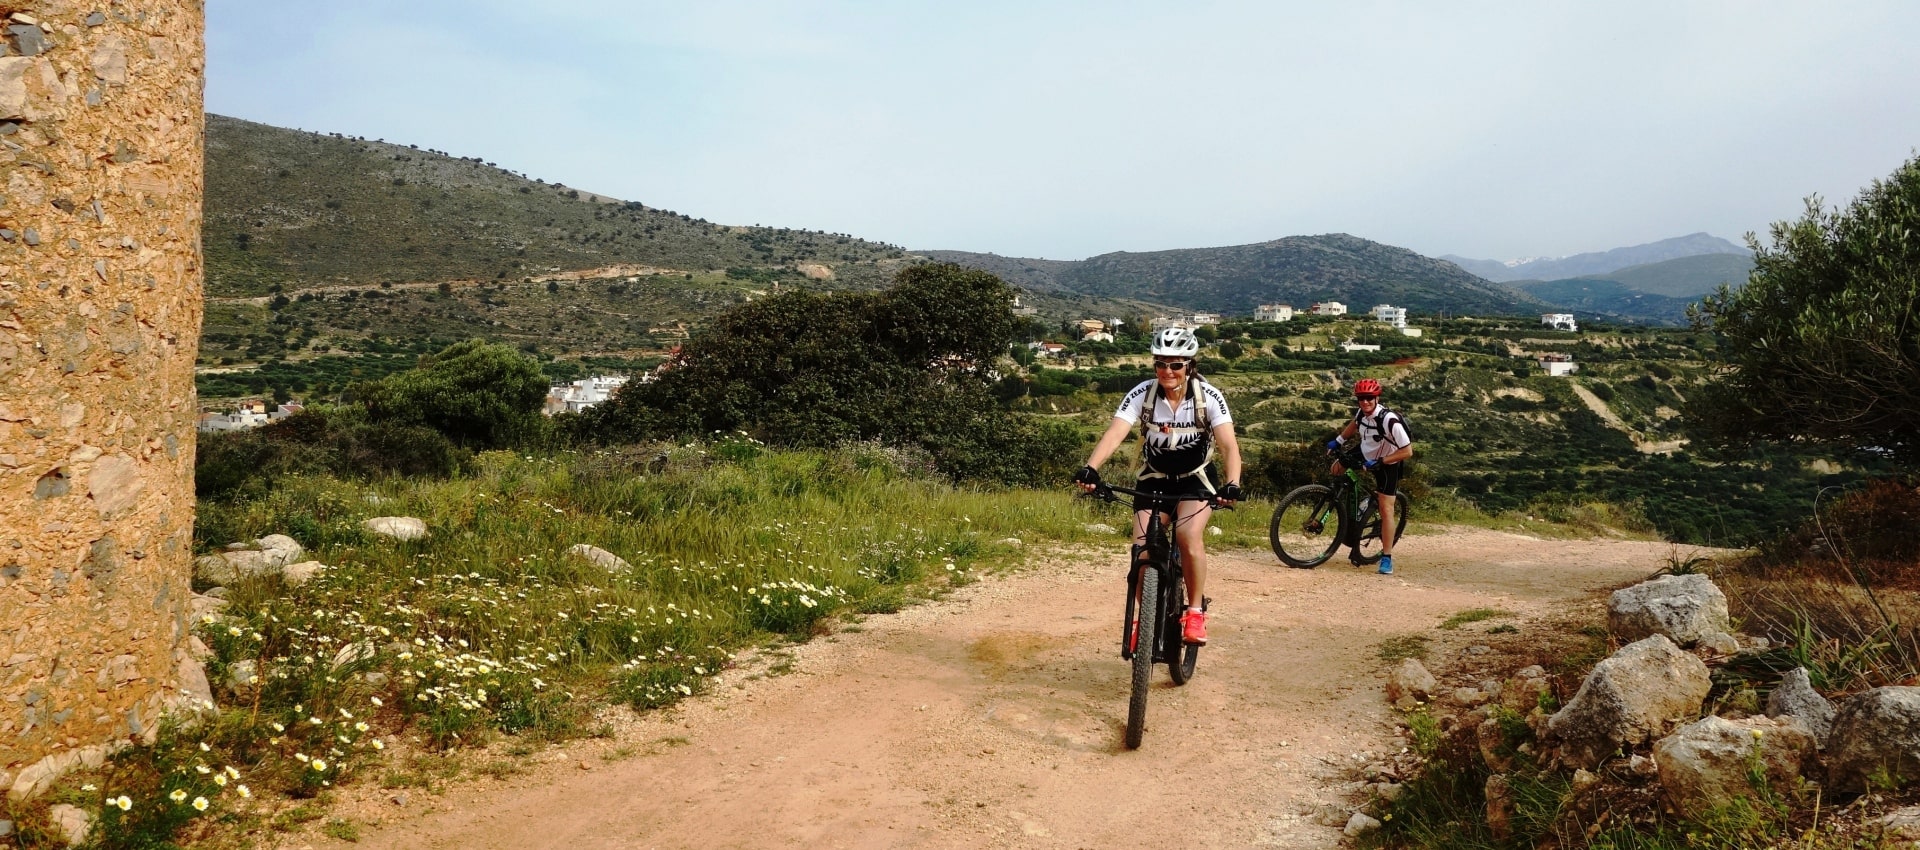 afternoon ebike tour Crete Kreta 3 hours easy bike tour the old wind mill-min